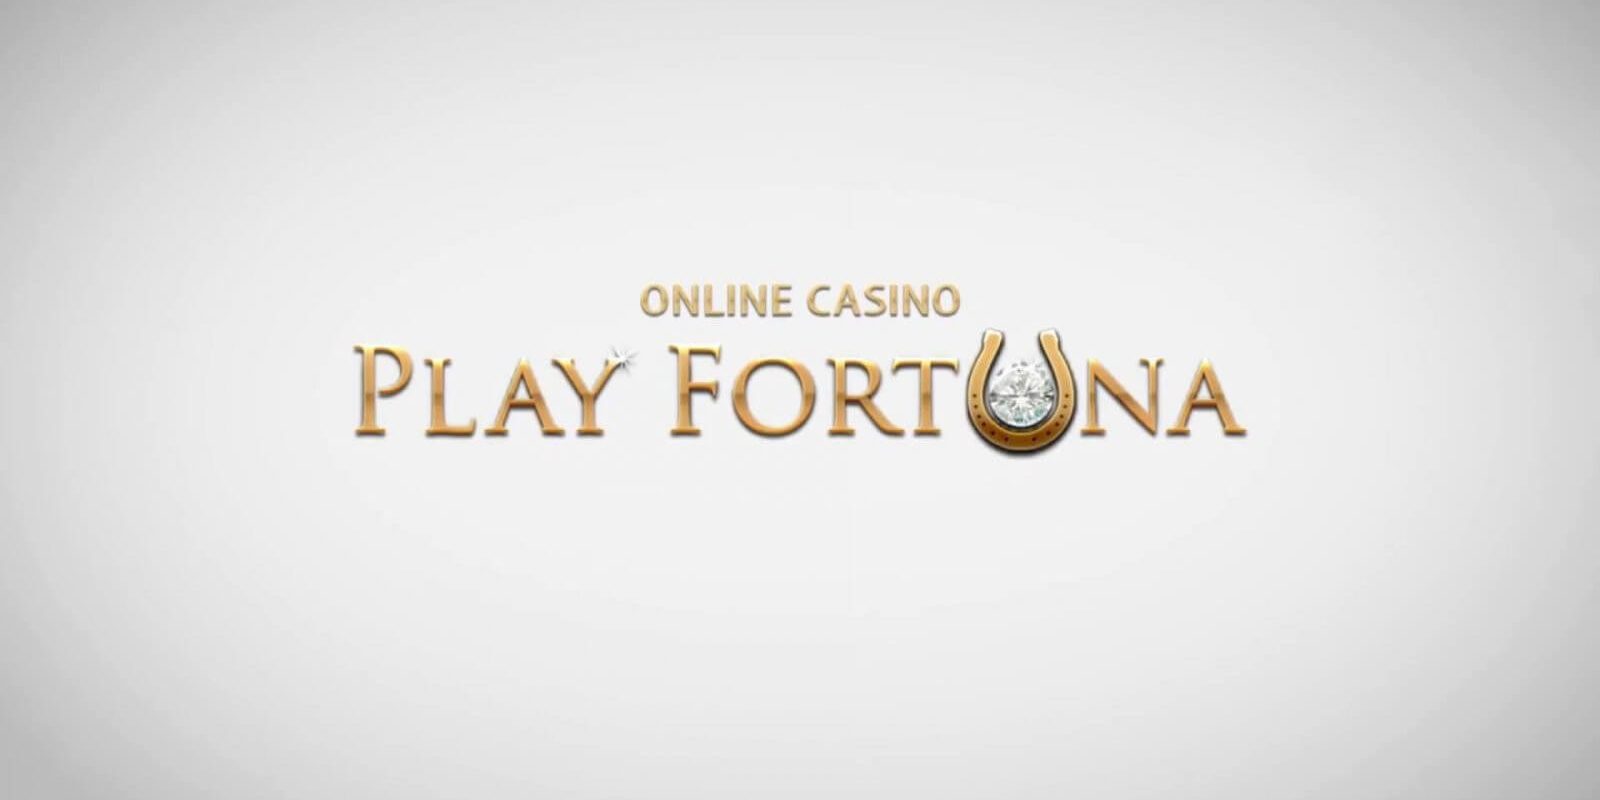 fortuna casino online